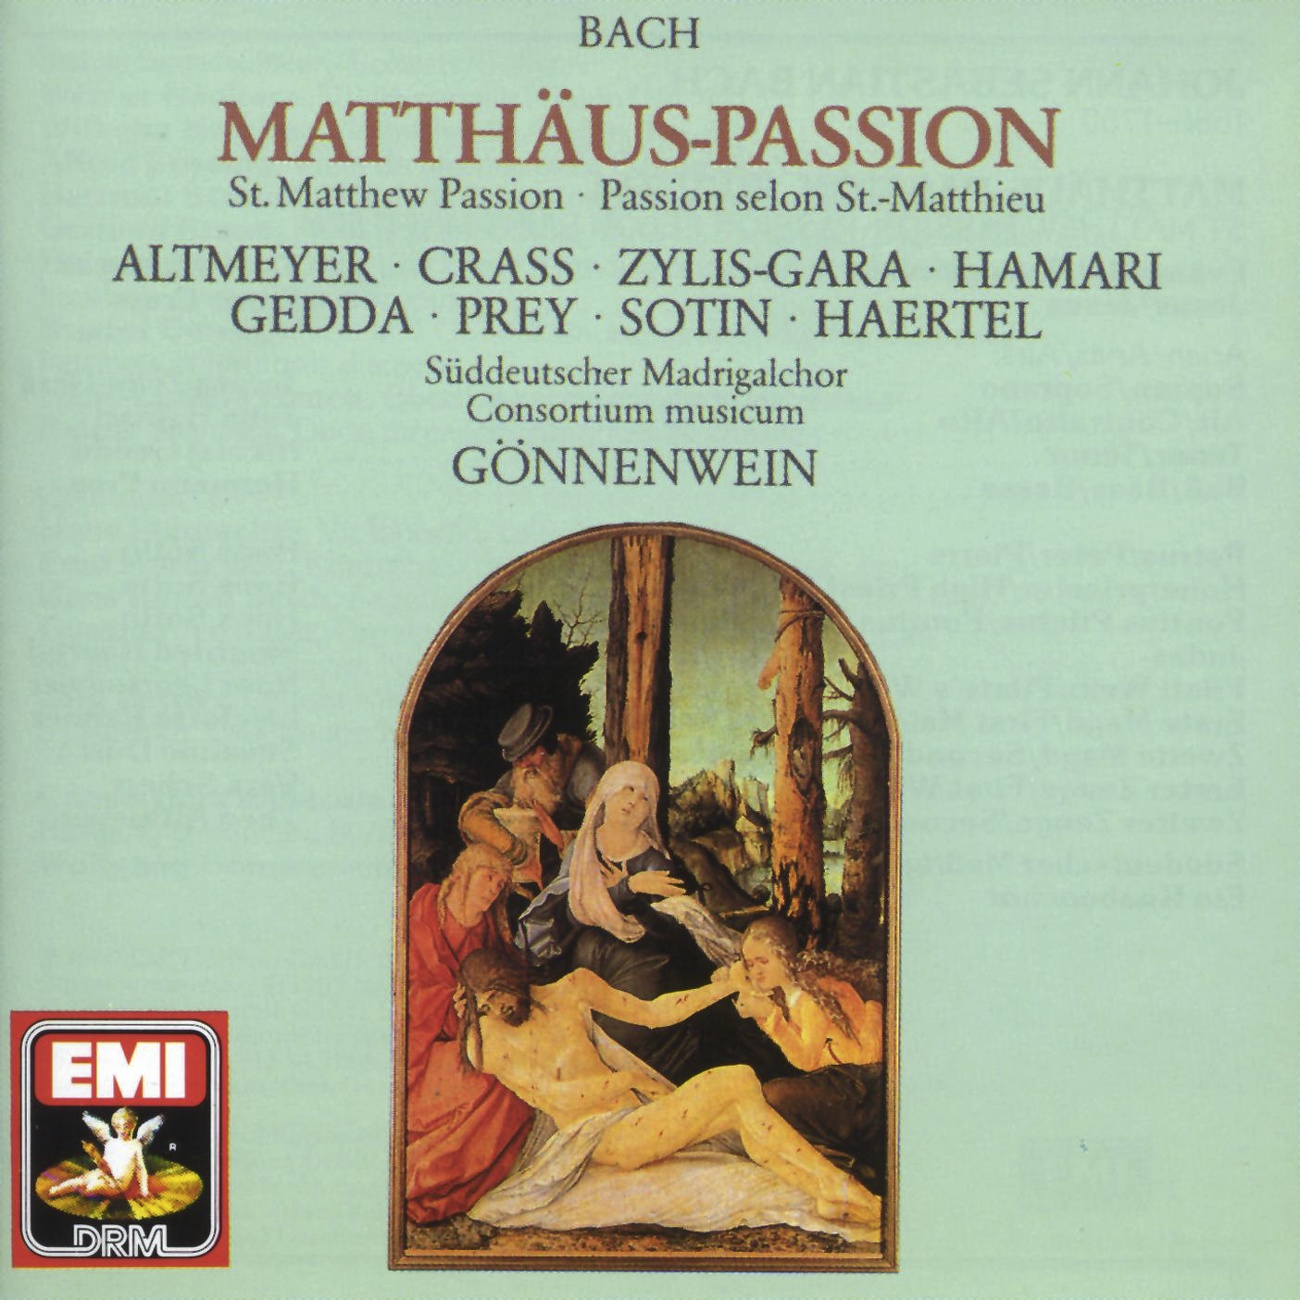 Matth usPassion BWV 244  Oratorium in 2 Teilen 1989 Digital Remaster, 1. Teil: Nr. 14  Chor: Wo Willst Du Chor I  Orchester